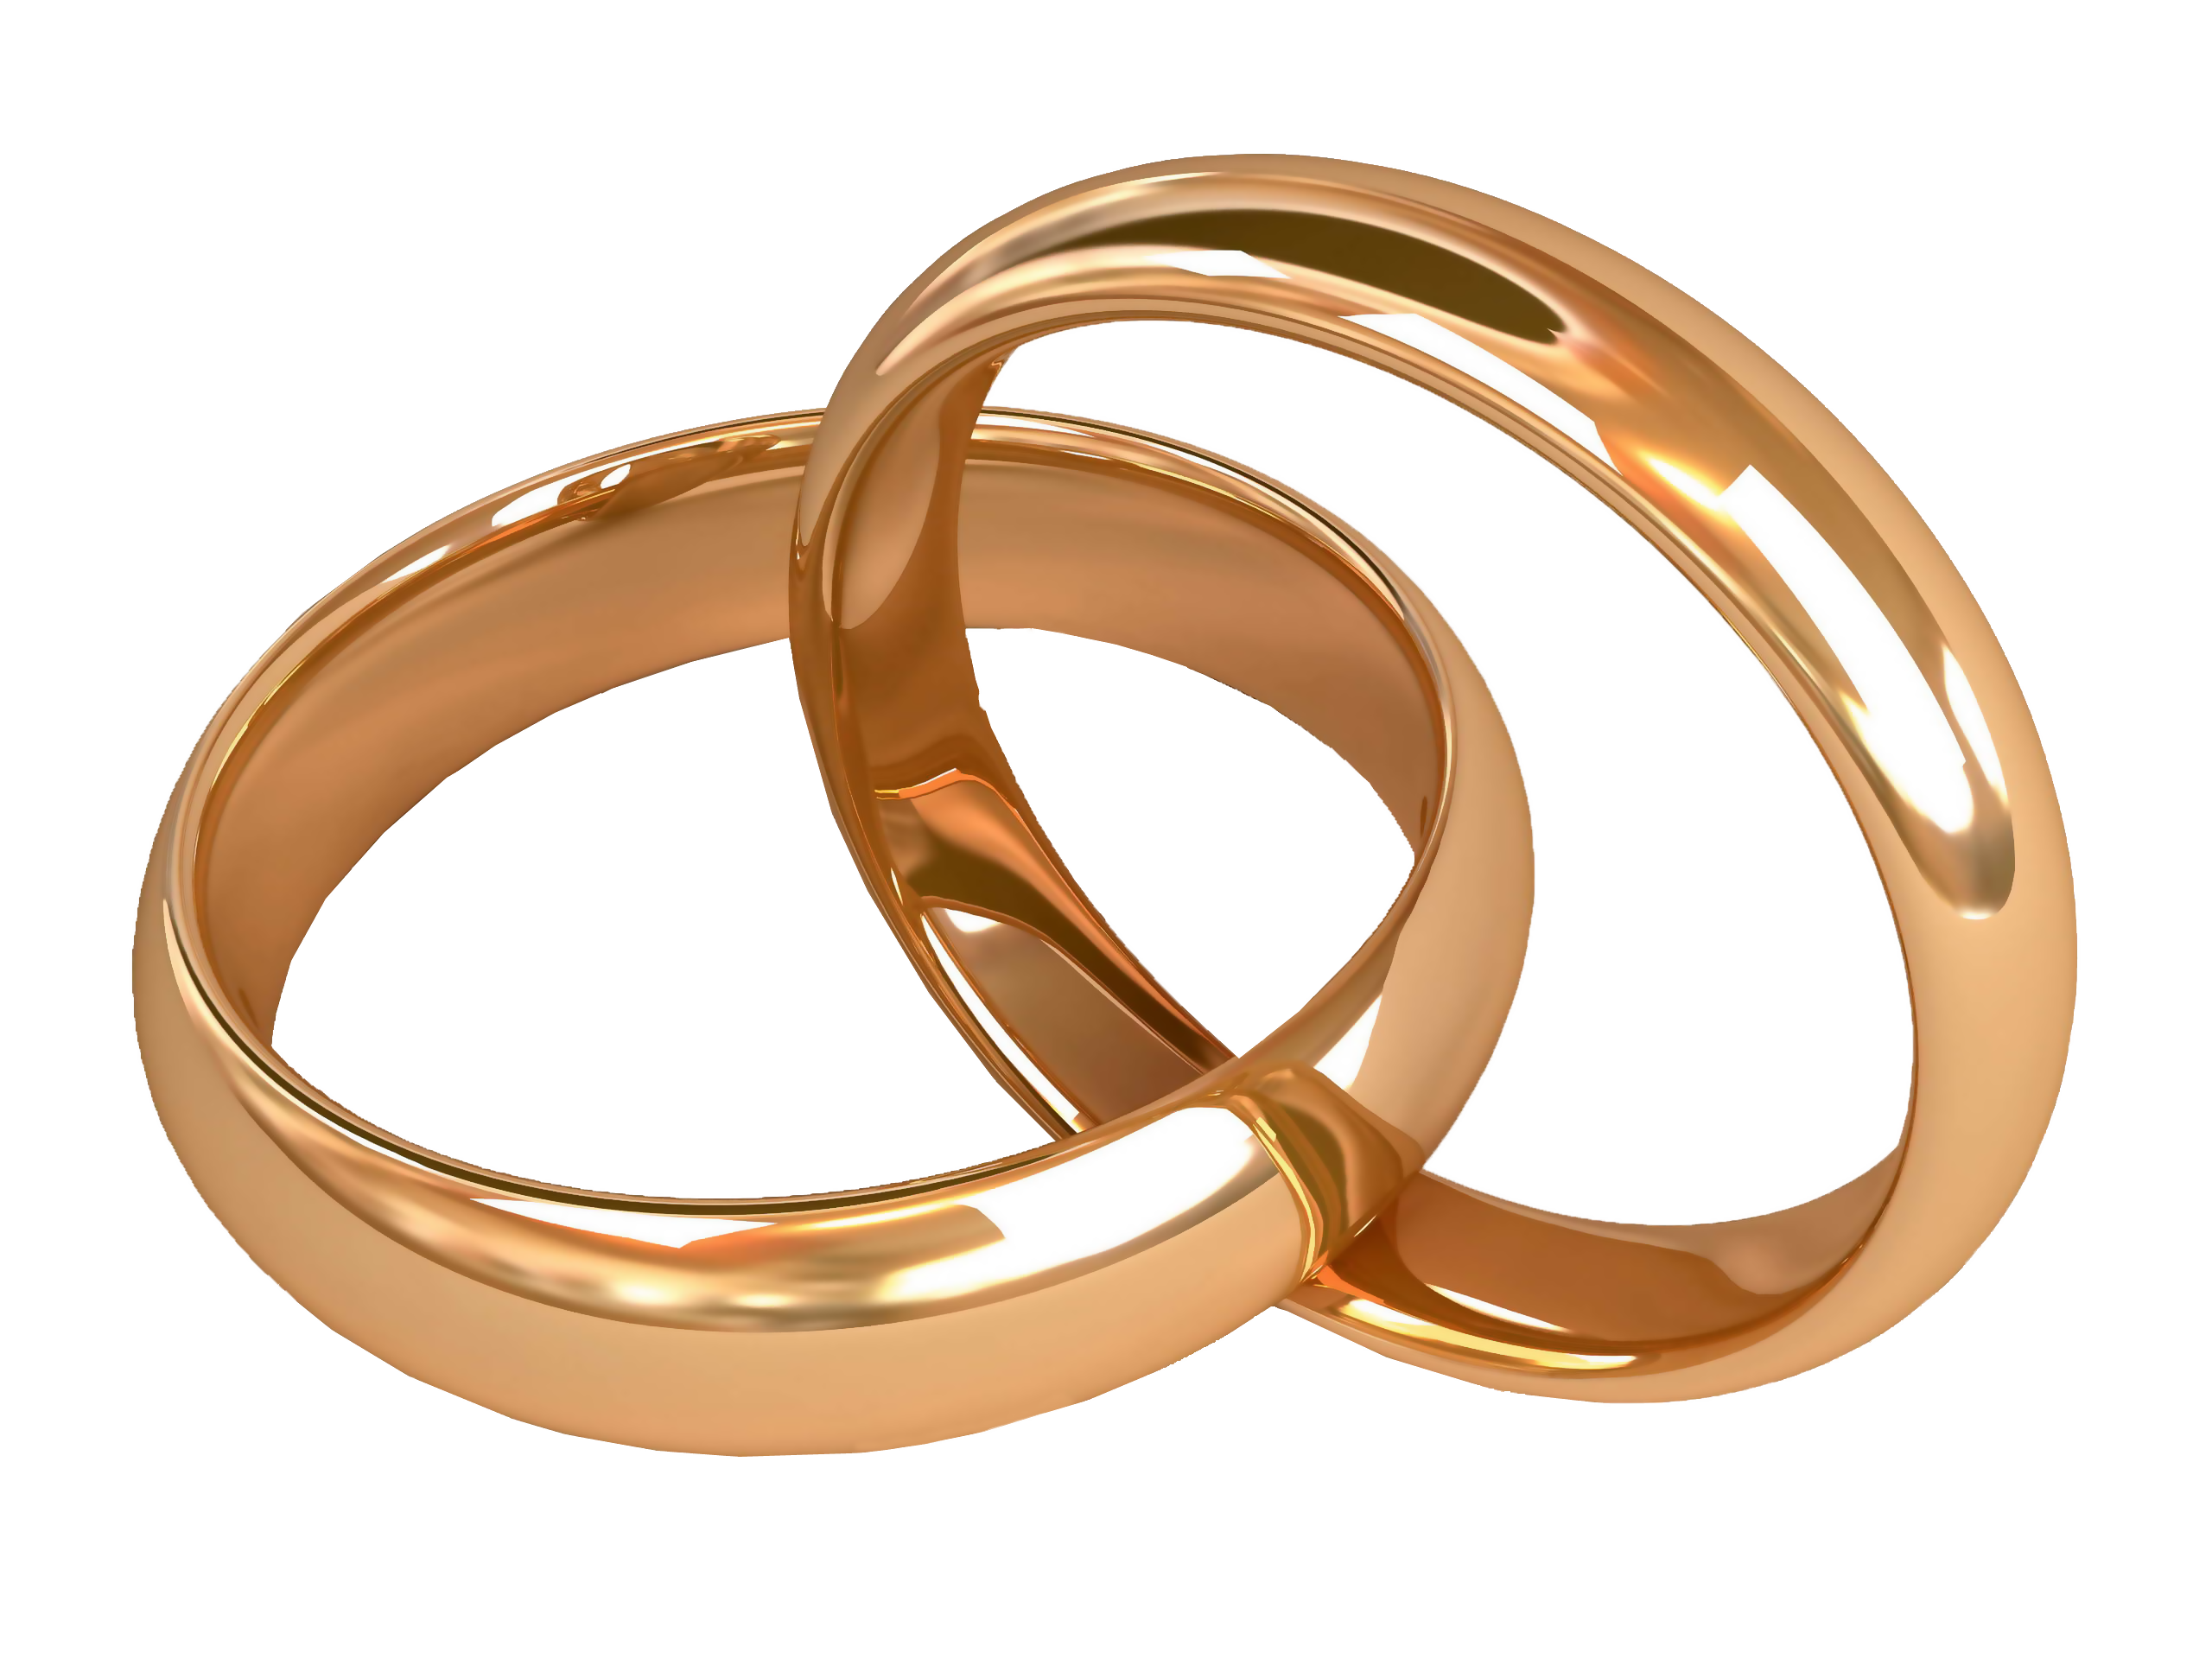 File:Placing a wedding ring.jpg - Wikipedia